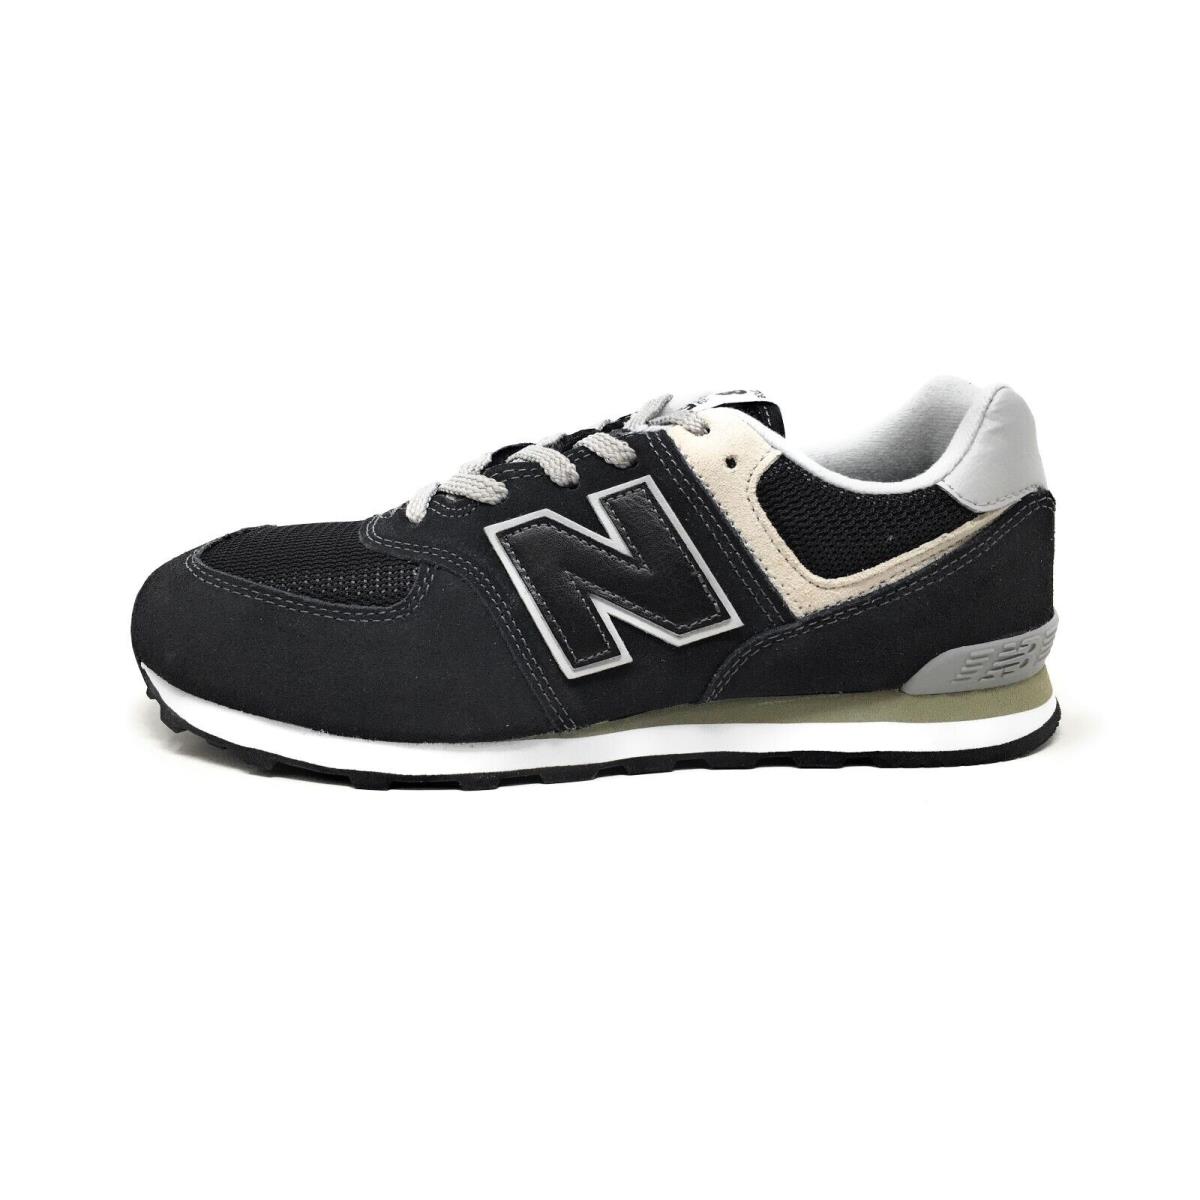 New Balance 574 Classic Big Kids Running Shoes Sneakers GC574GK - Black/white - Black